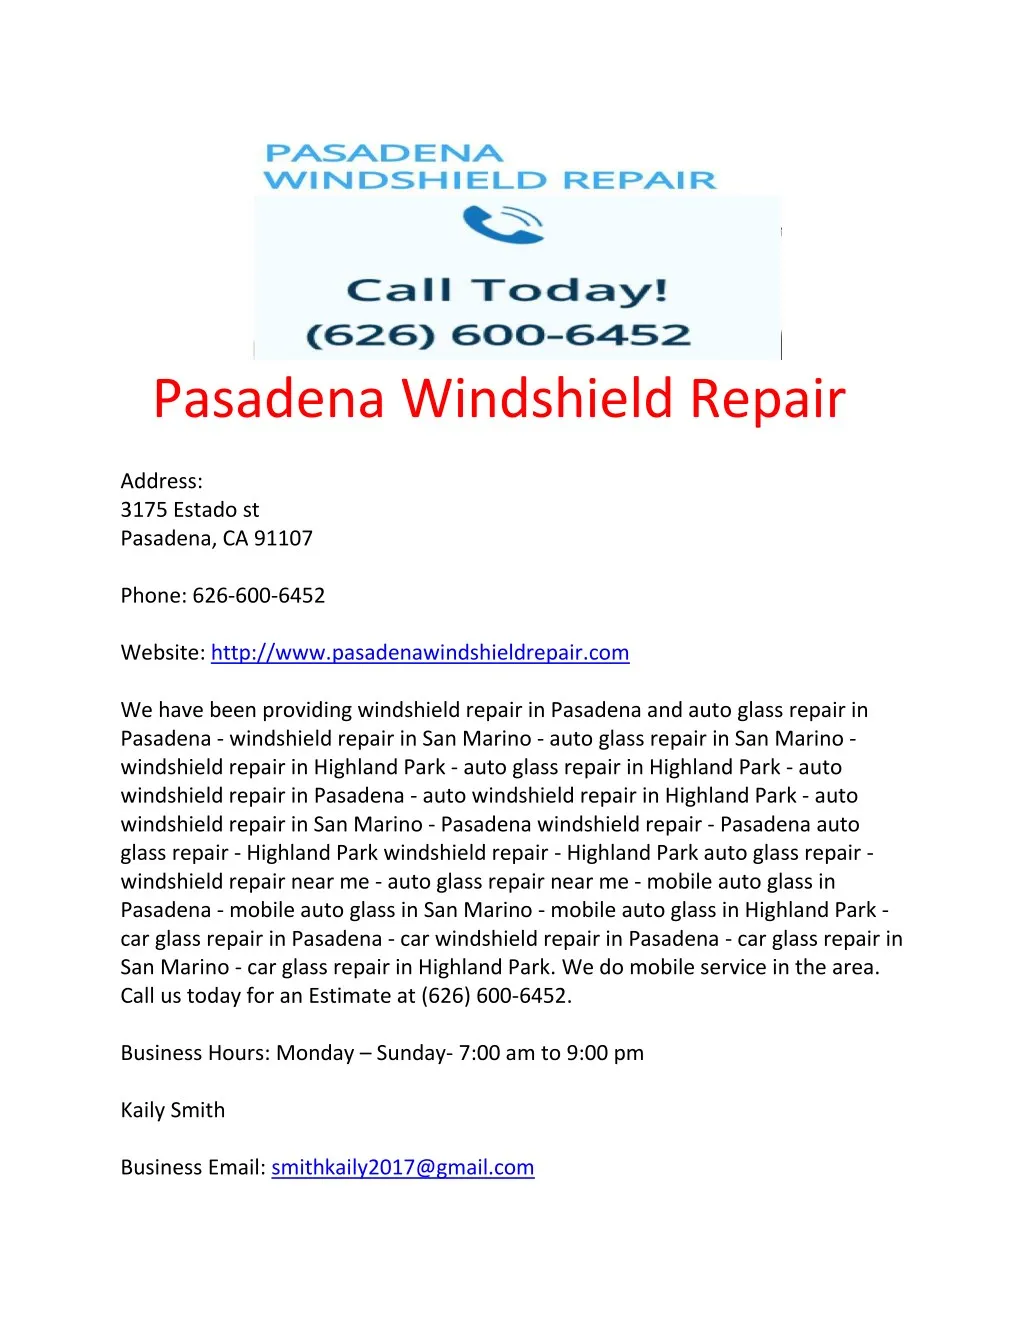 pasadena windshield repair address 3175 estado